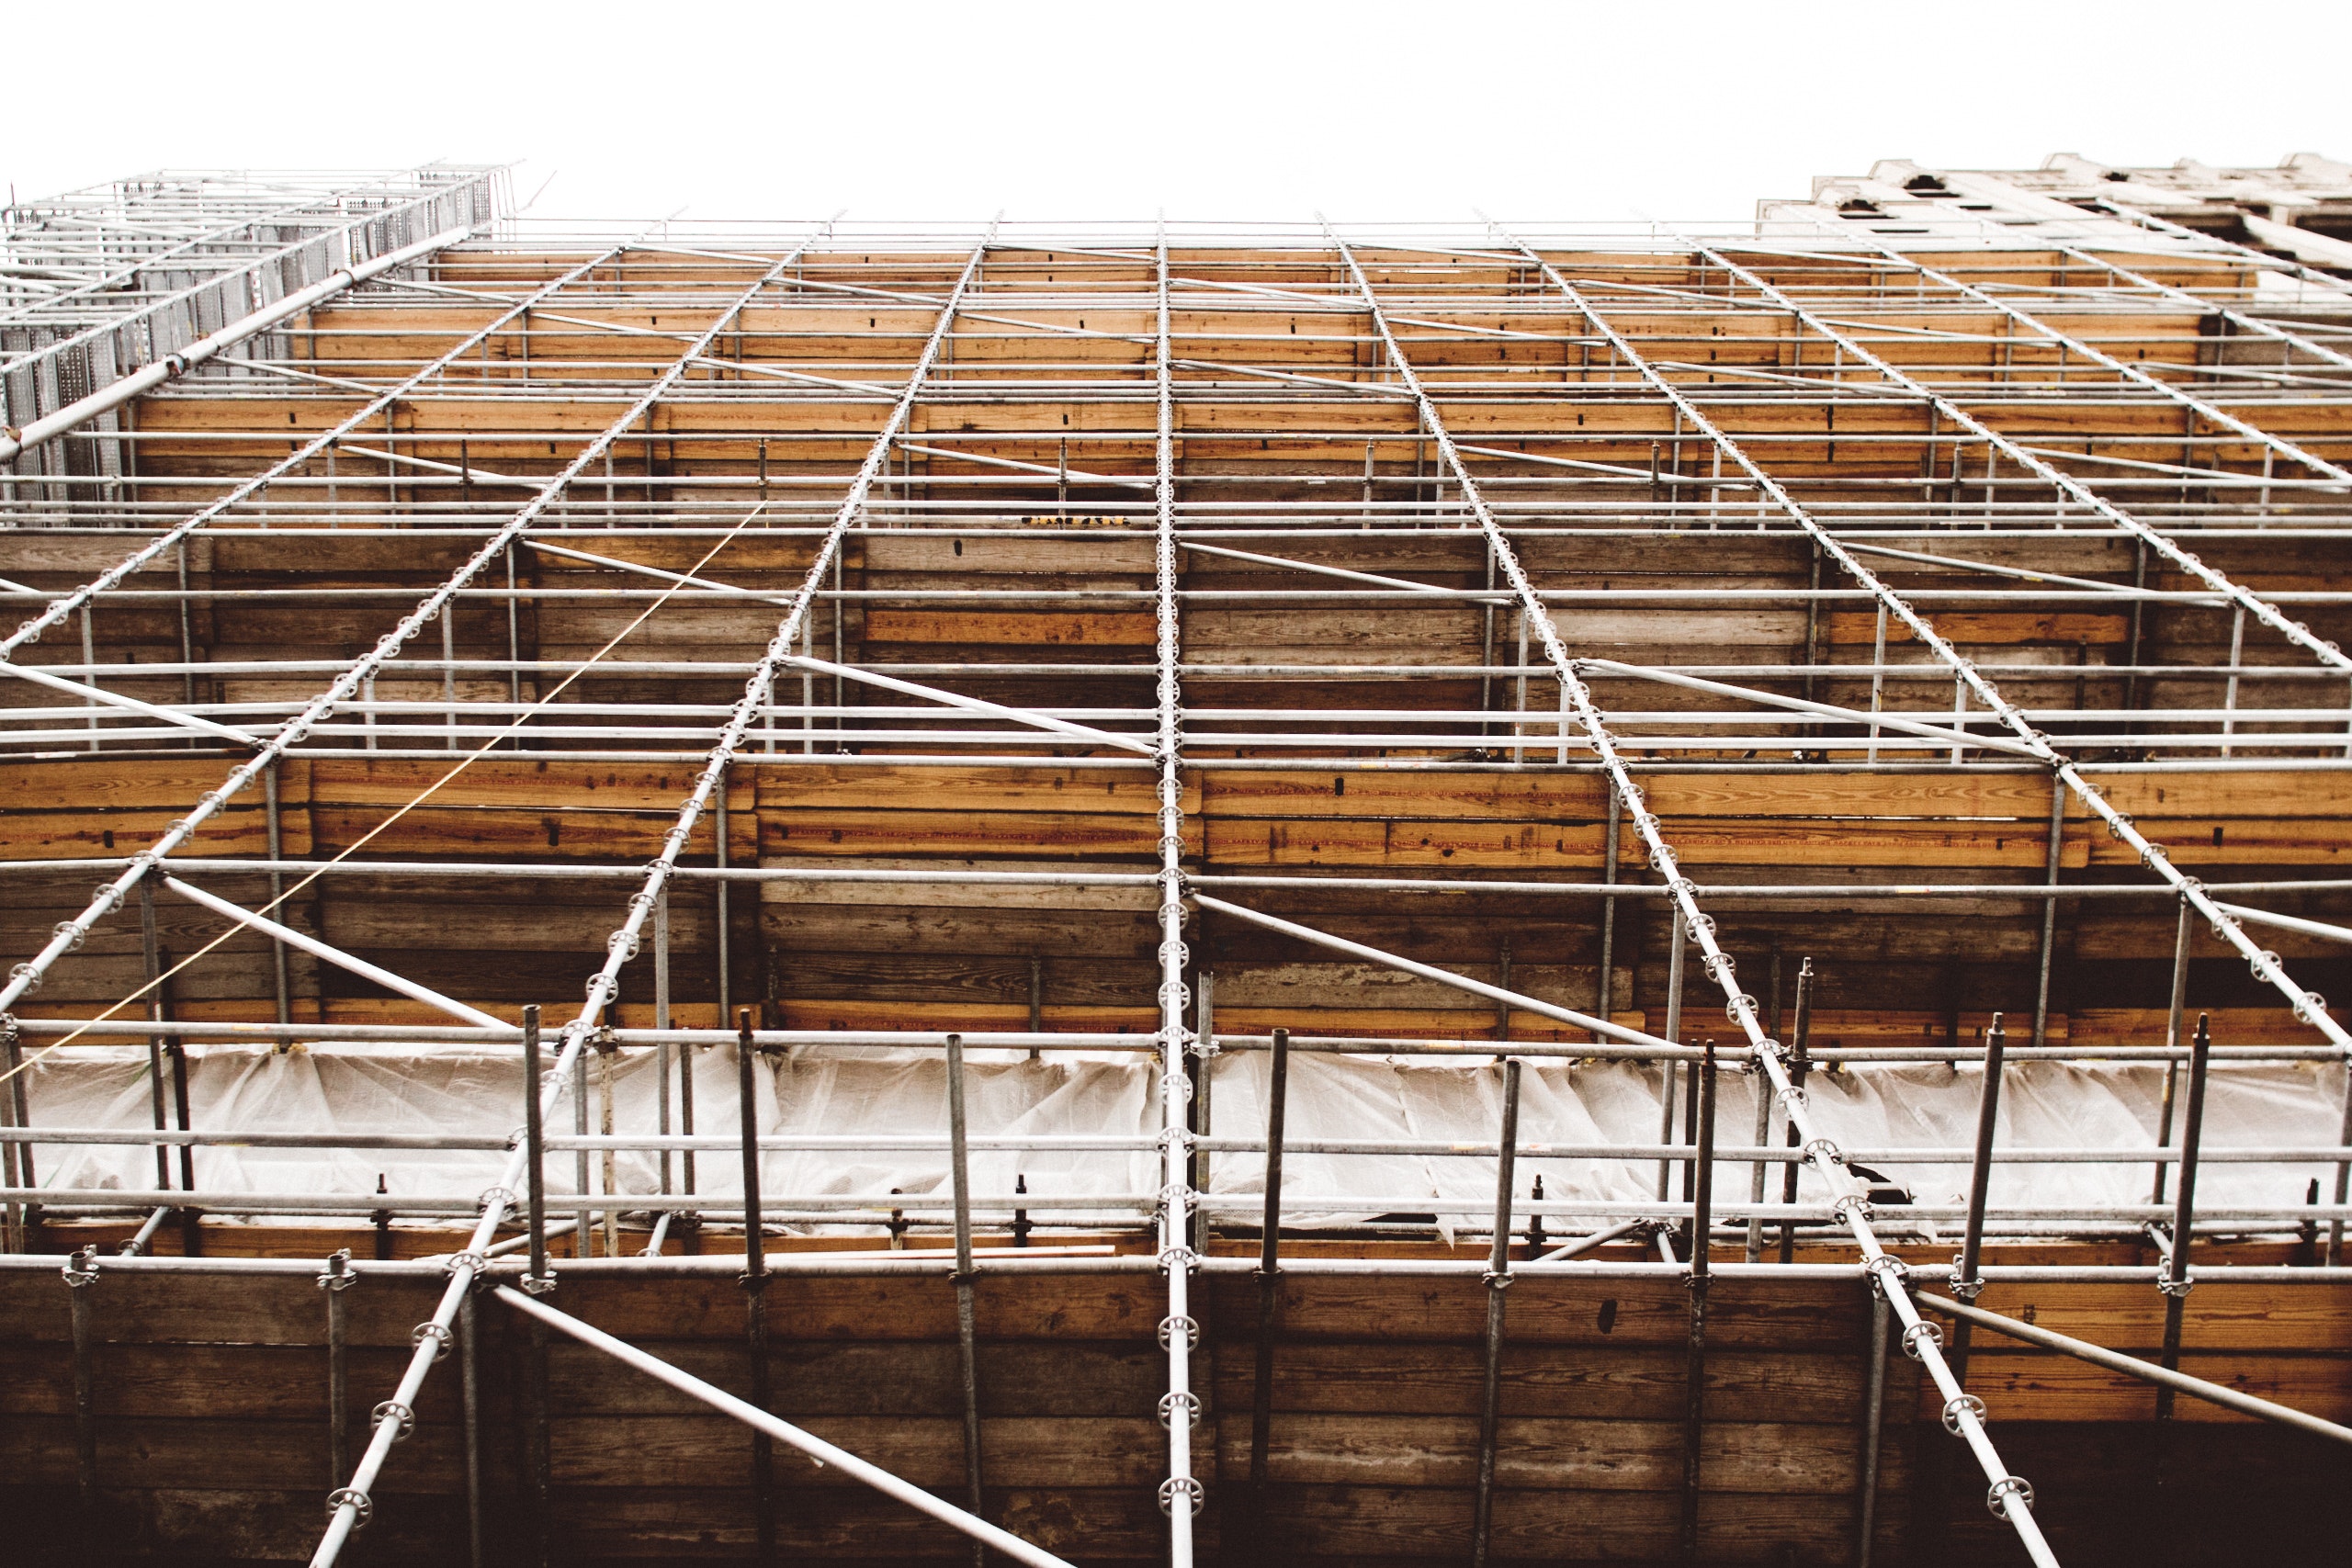 An image of putlog scaffolding